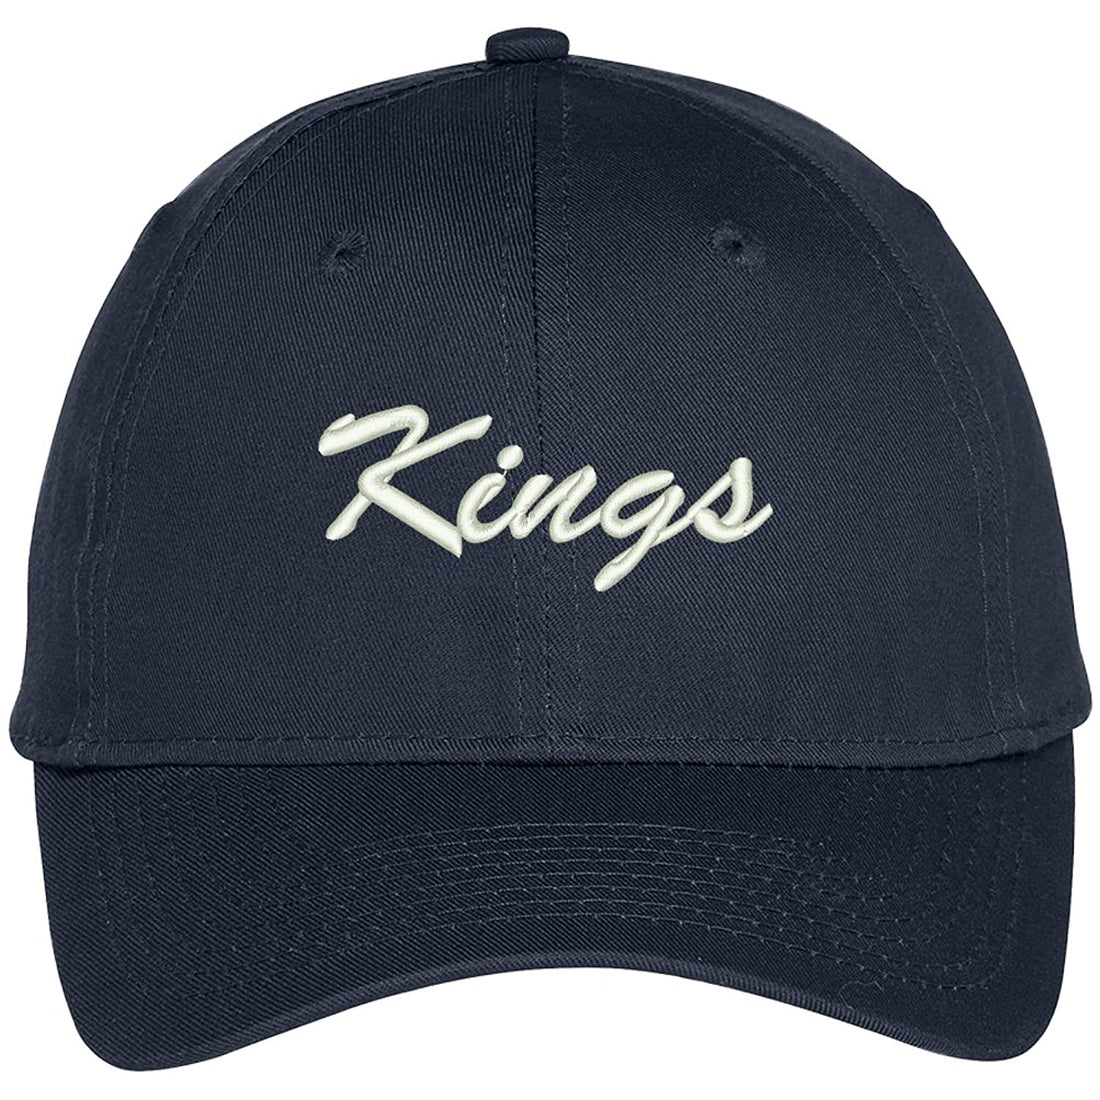 Trendy Apparel Shop Kings Embroidered Precurved Adjustable Cap